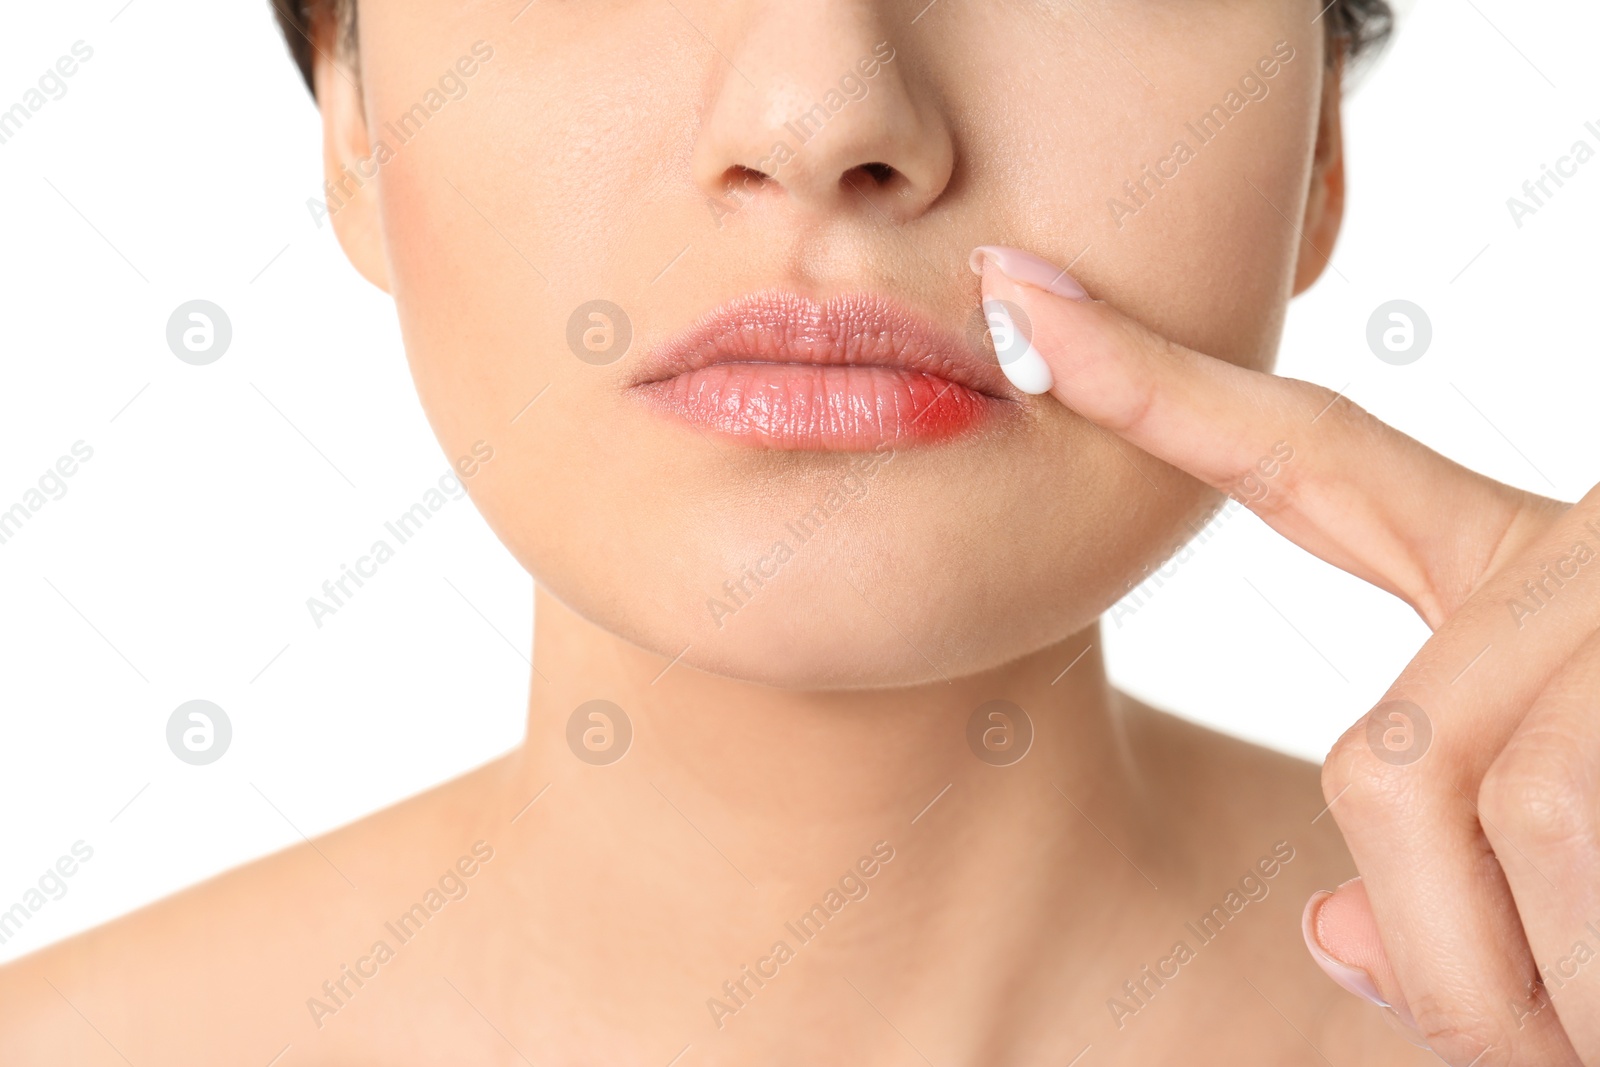 Photo of Woman applying cream onto lips on white background, closeup